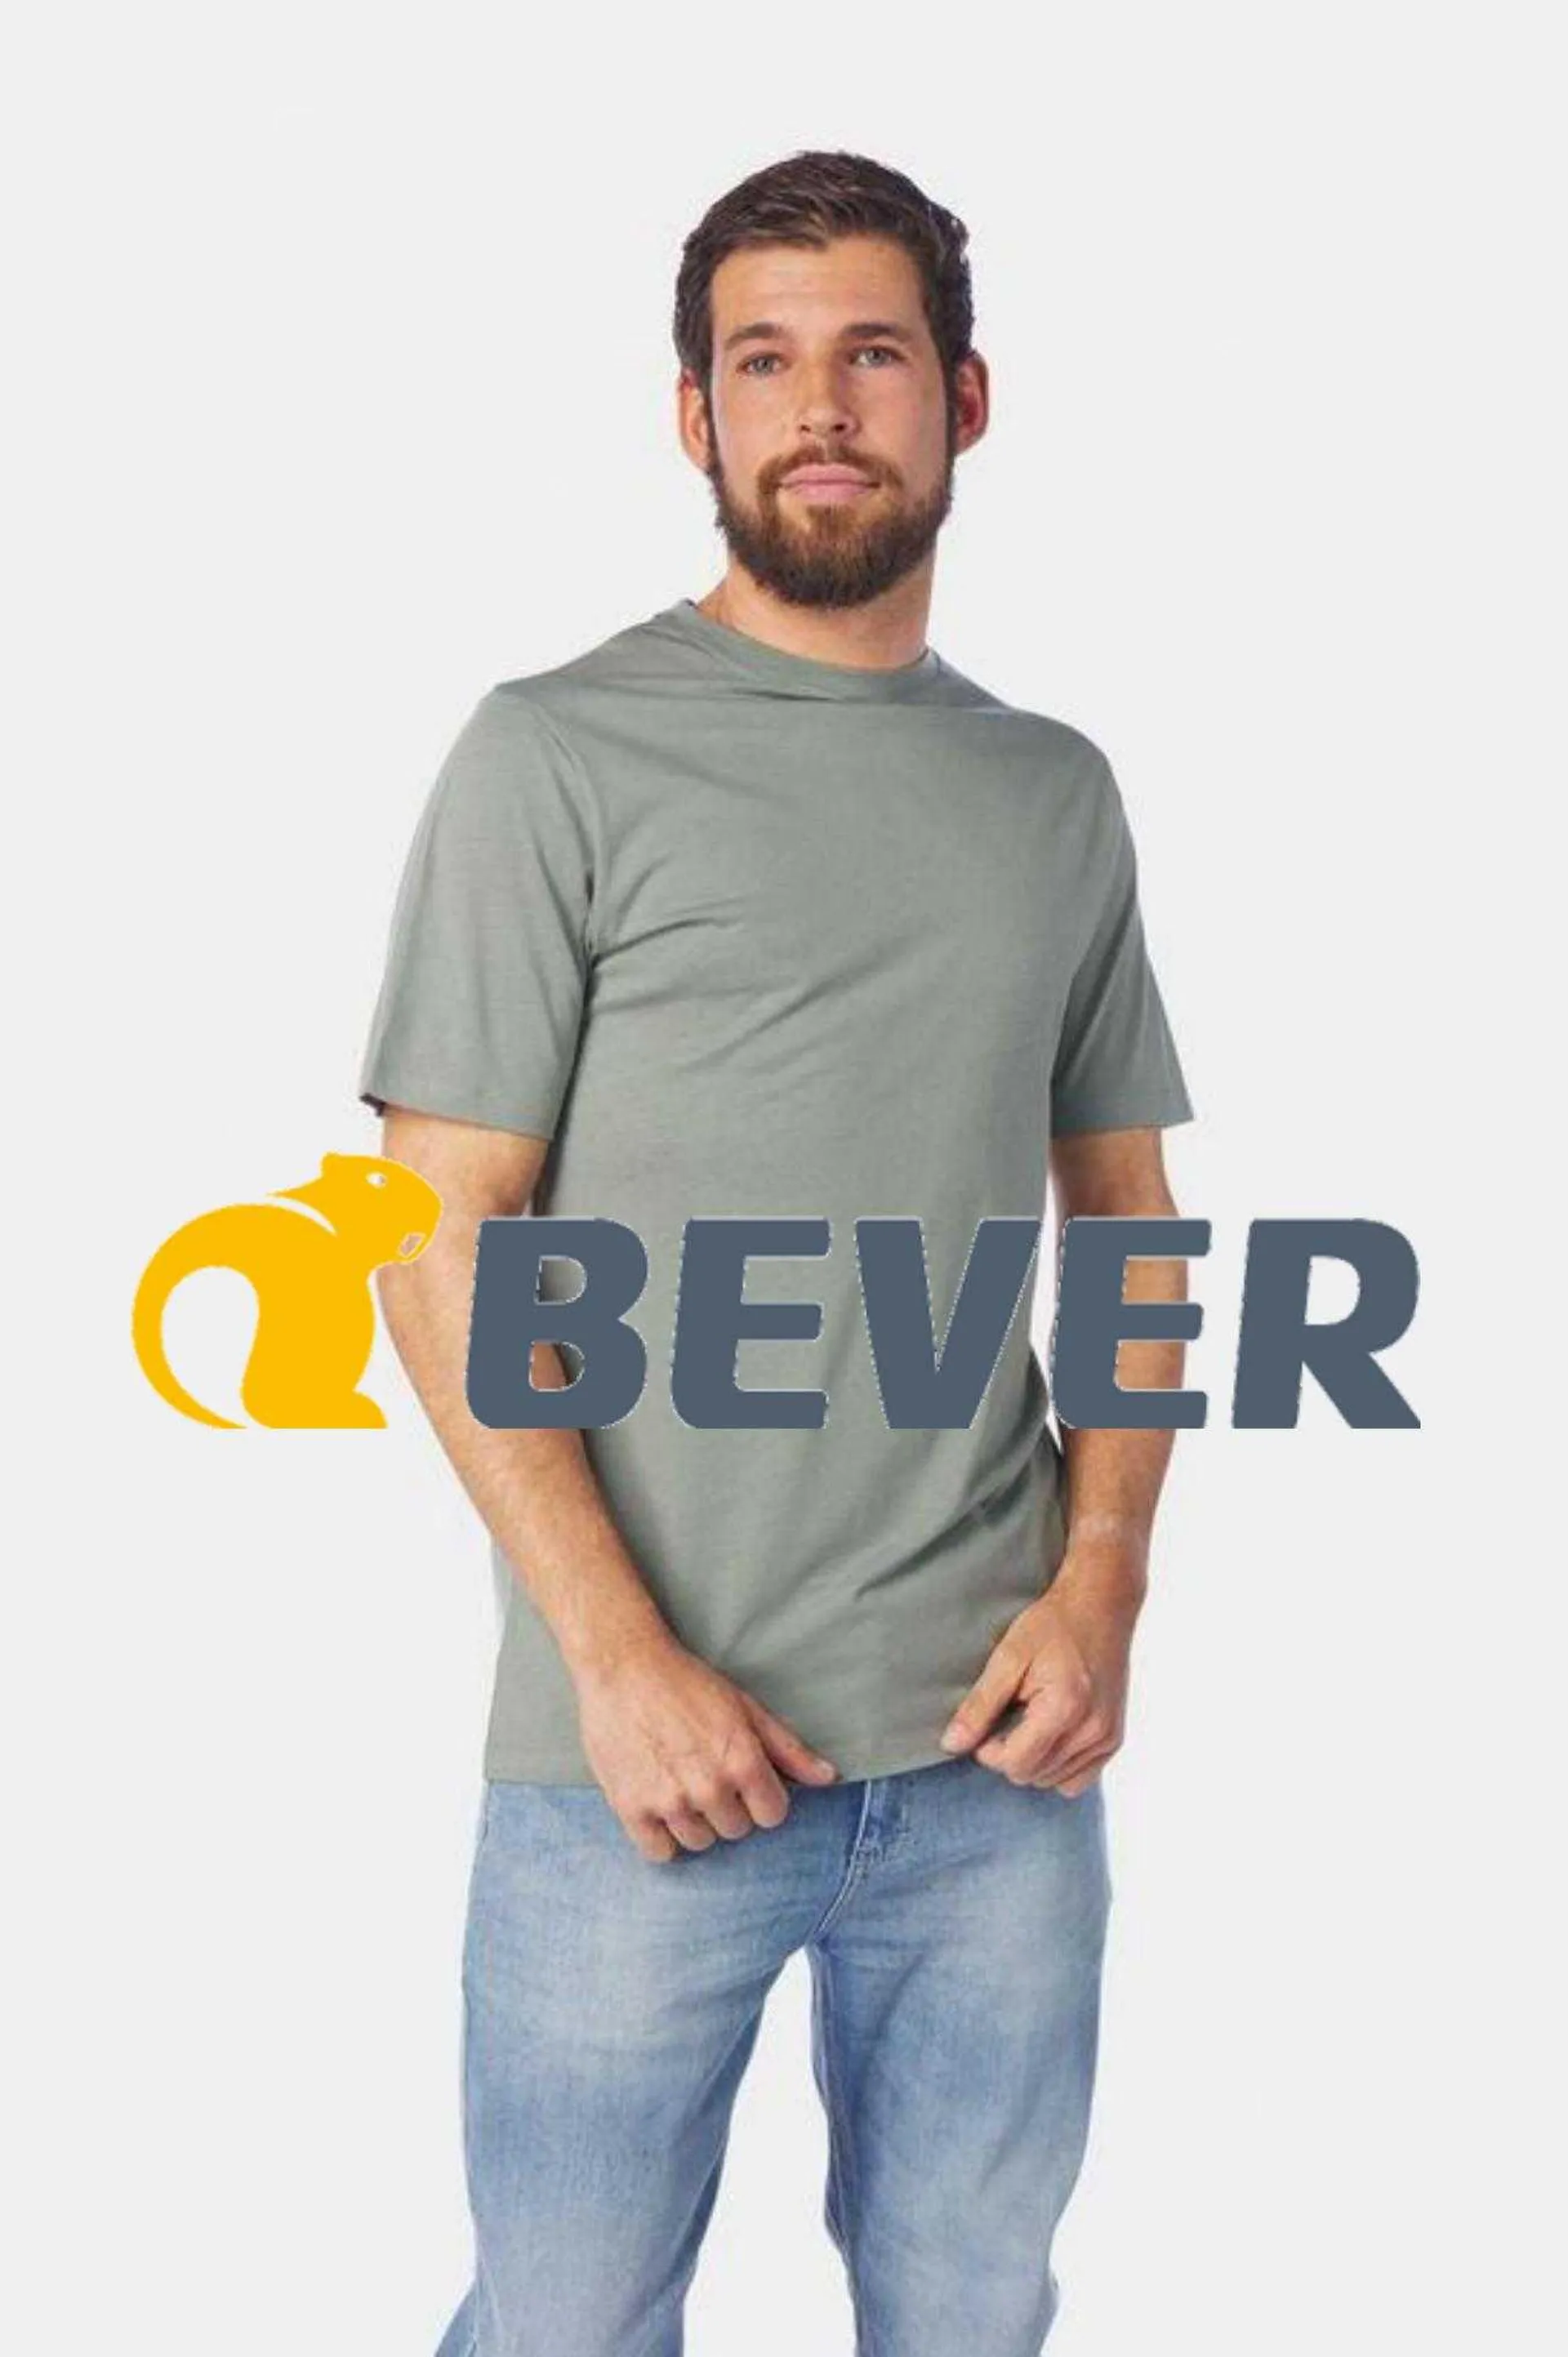 Bever Folder - 1